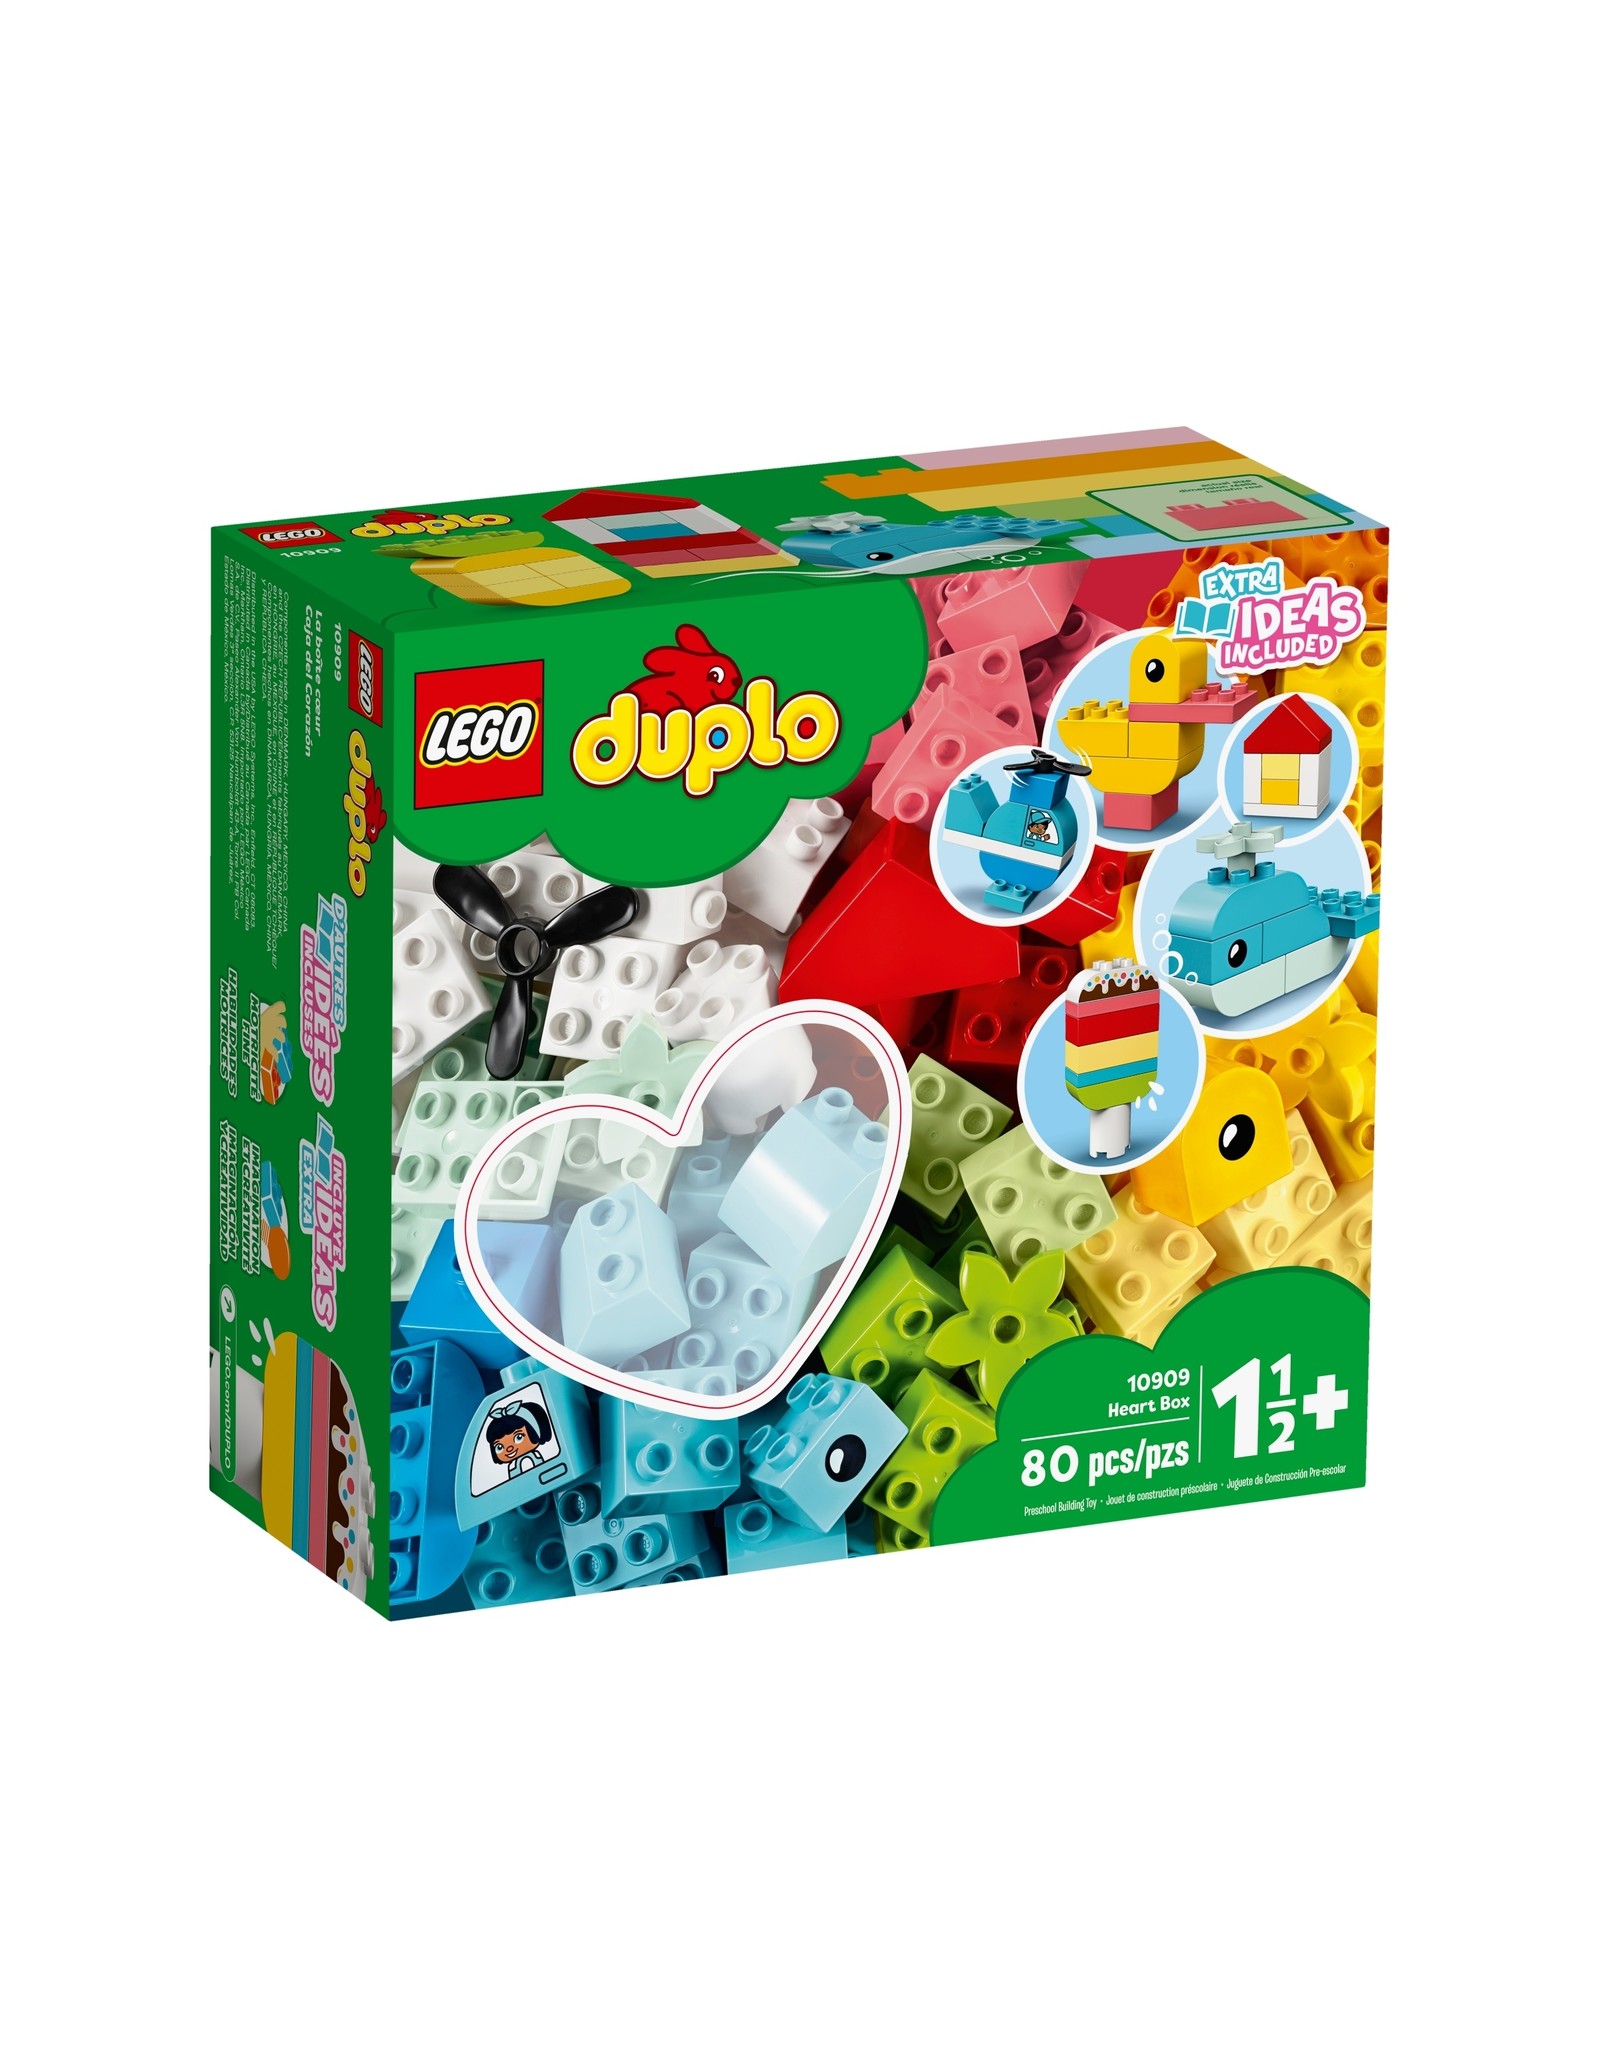 LEGO Duplo Classic 10909 Heart Box